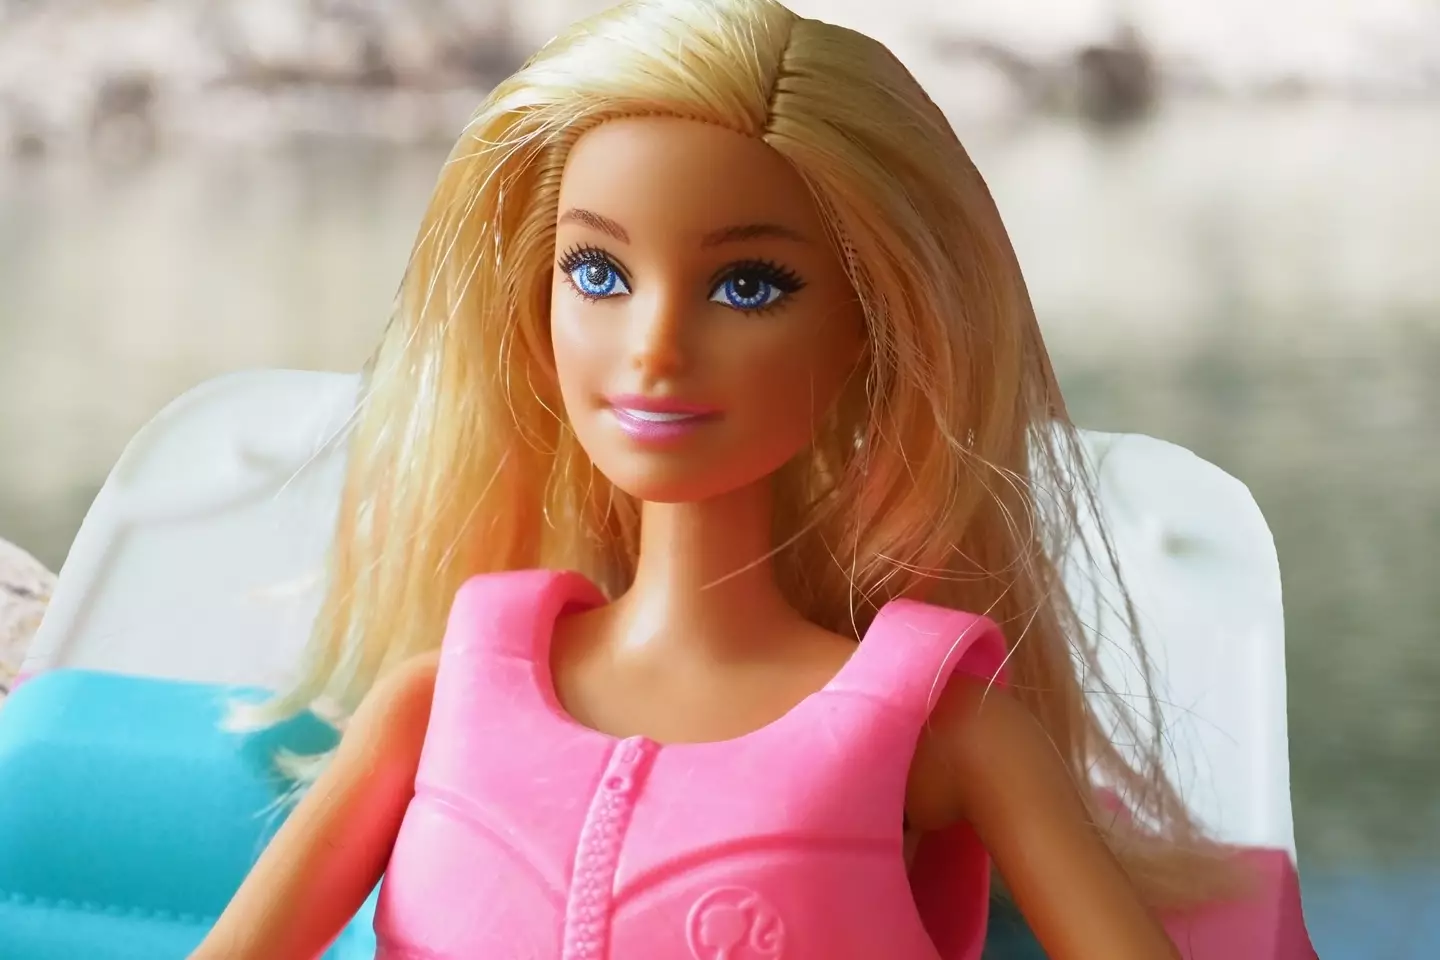 Barbie's real name is Barbara.